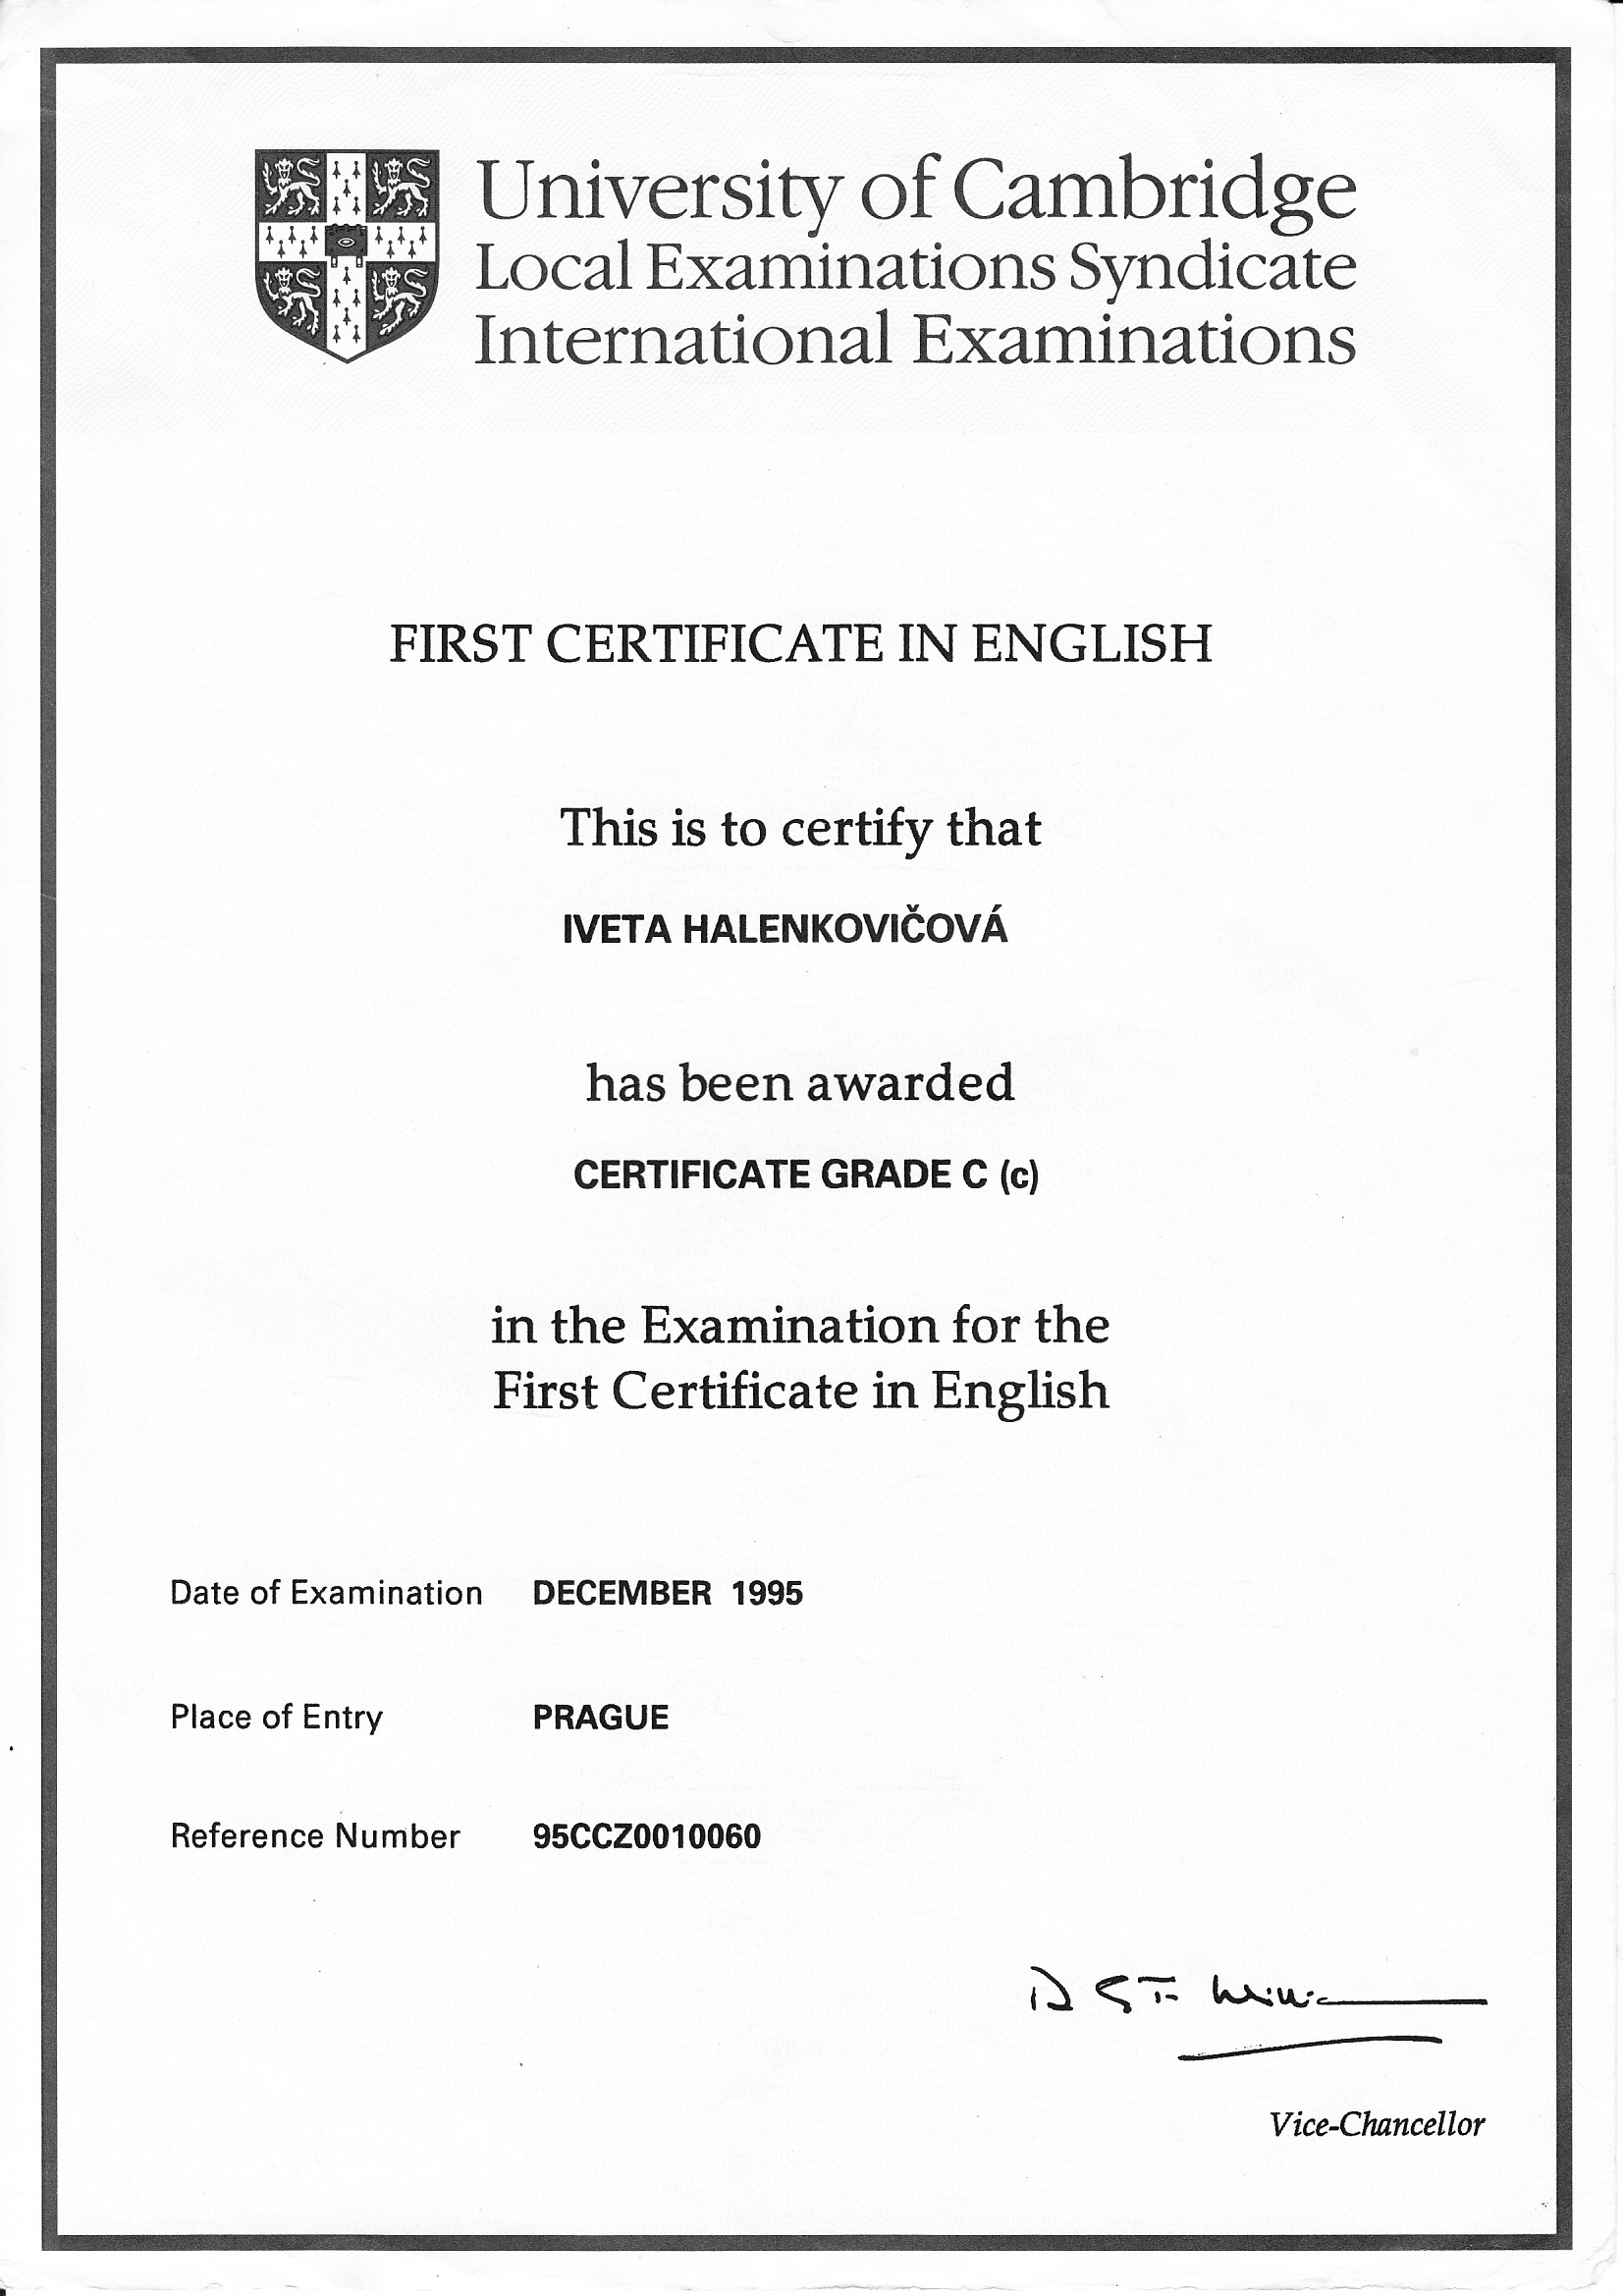 Univrzity of Cambridge certifikát prosinec 1995